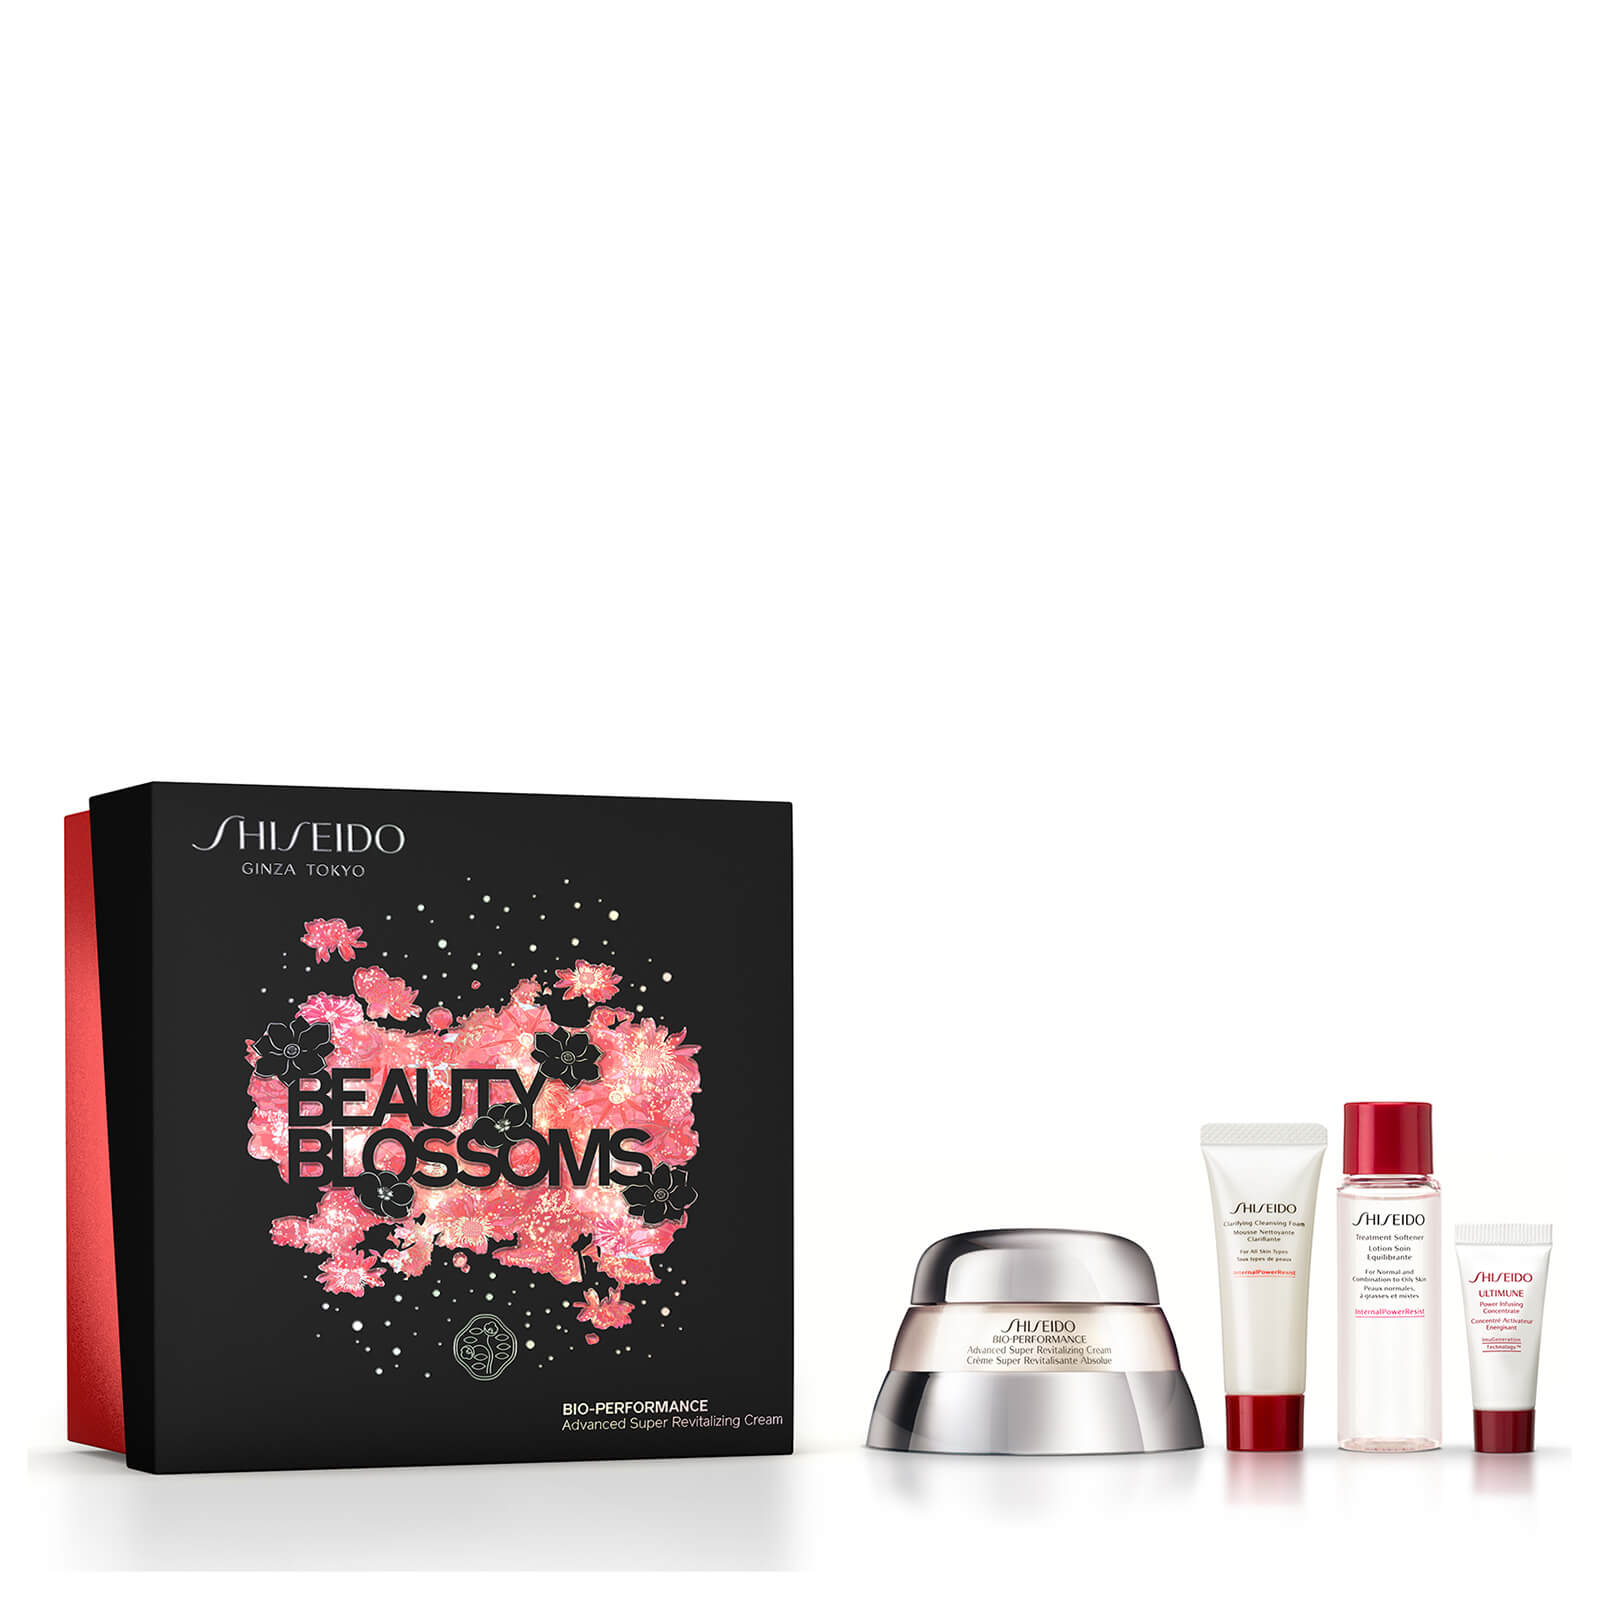 Shiseido Bio-Performance Advance Super Revitalizing Holiday Kit